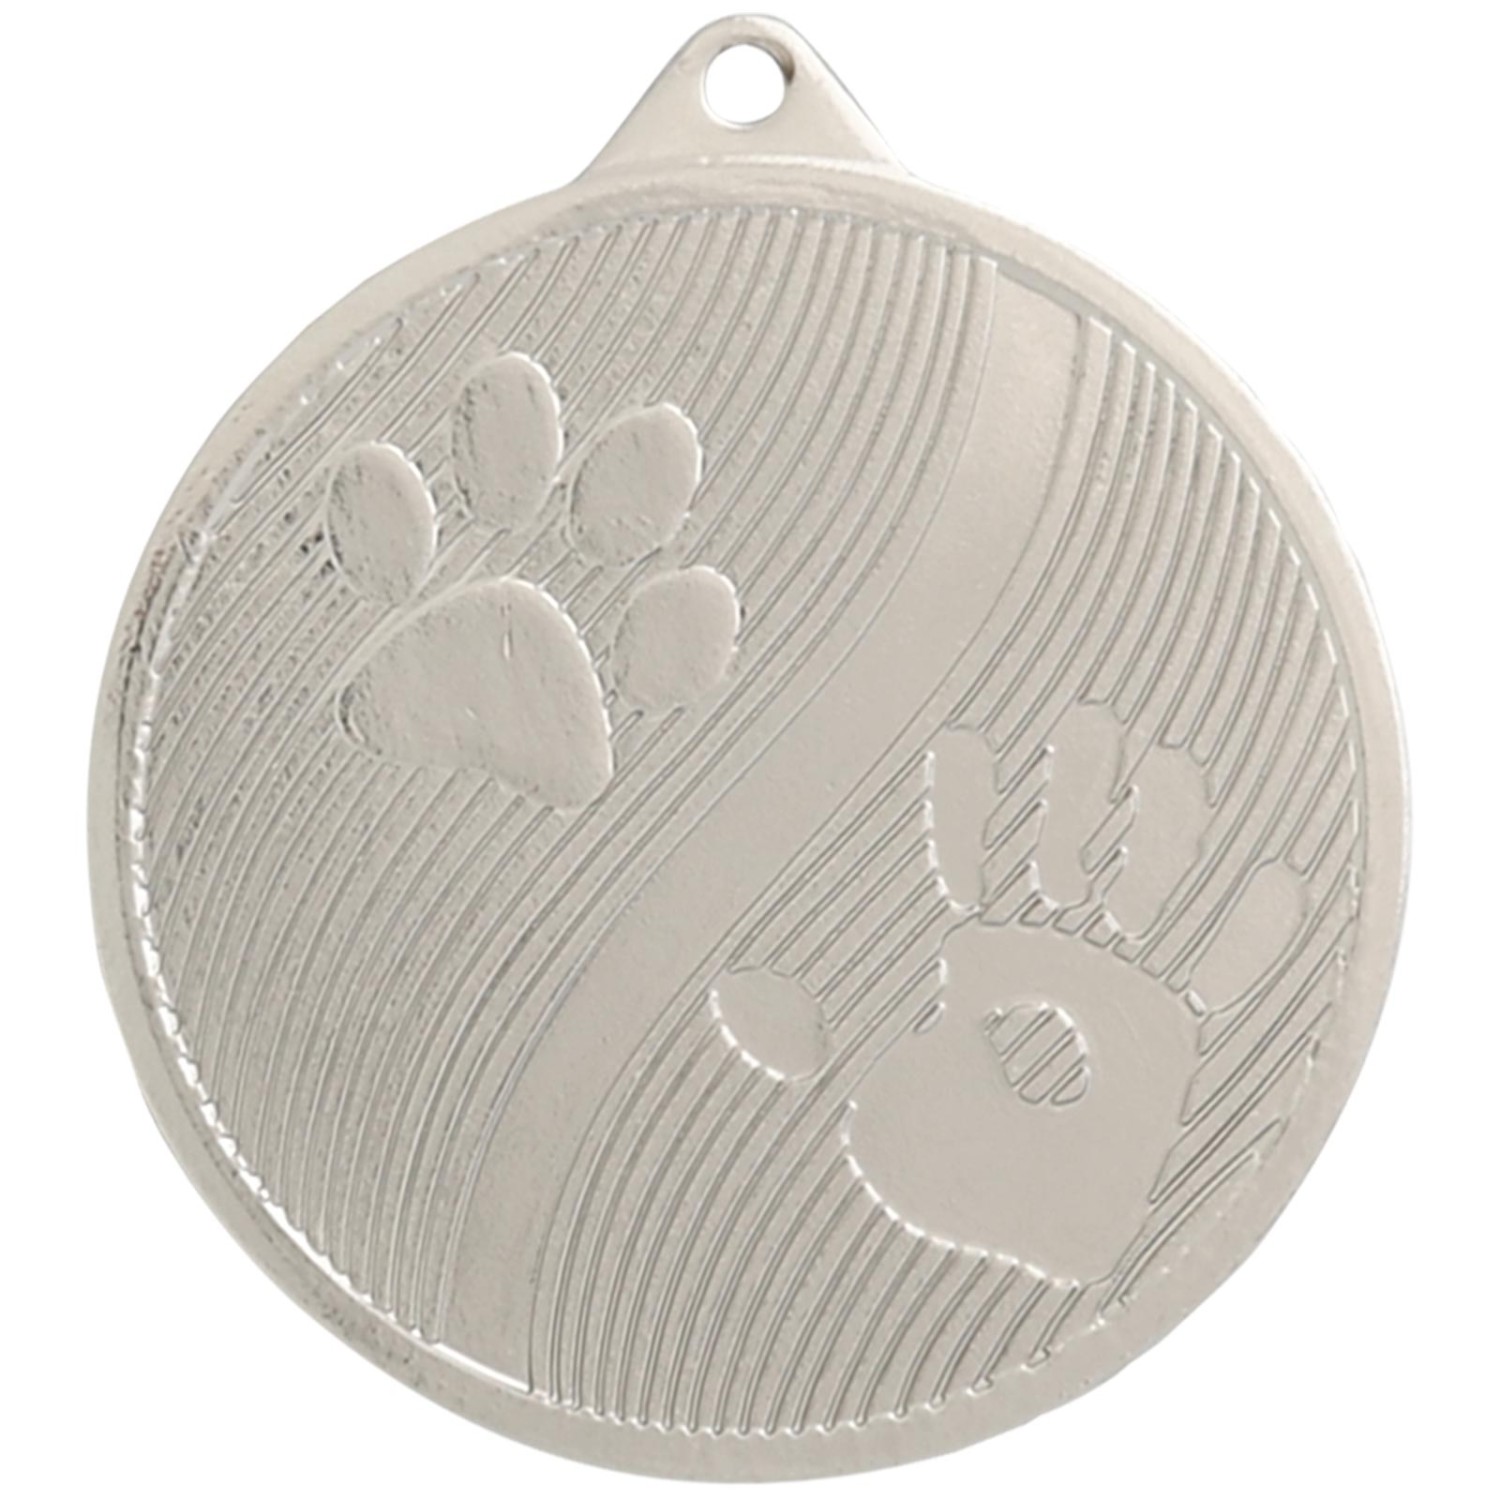 1. Foto Medaille Hunde Hundepfoten gold silber bronze 50 mm Stahl (Sorte: Set je 1x gold / silber / bronze)